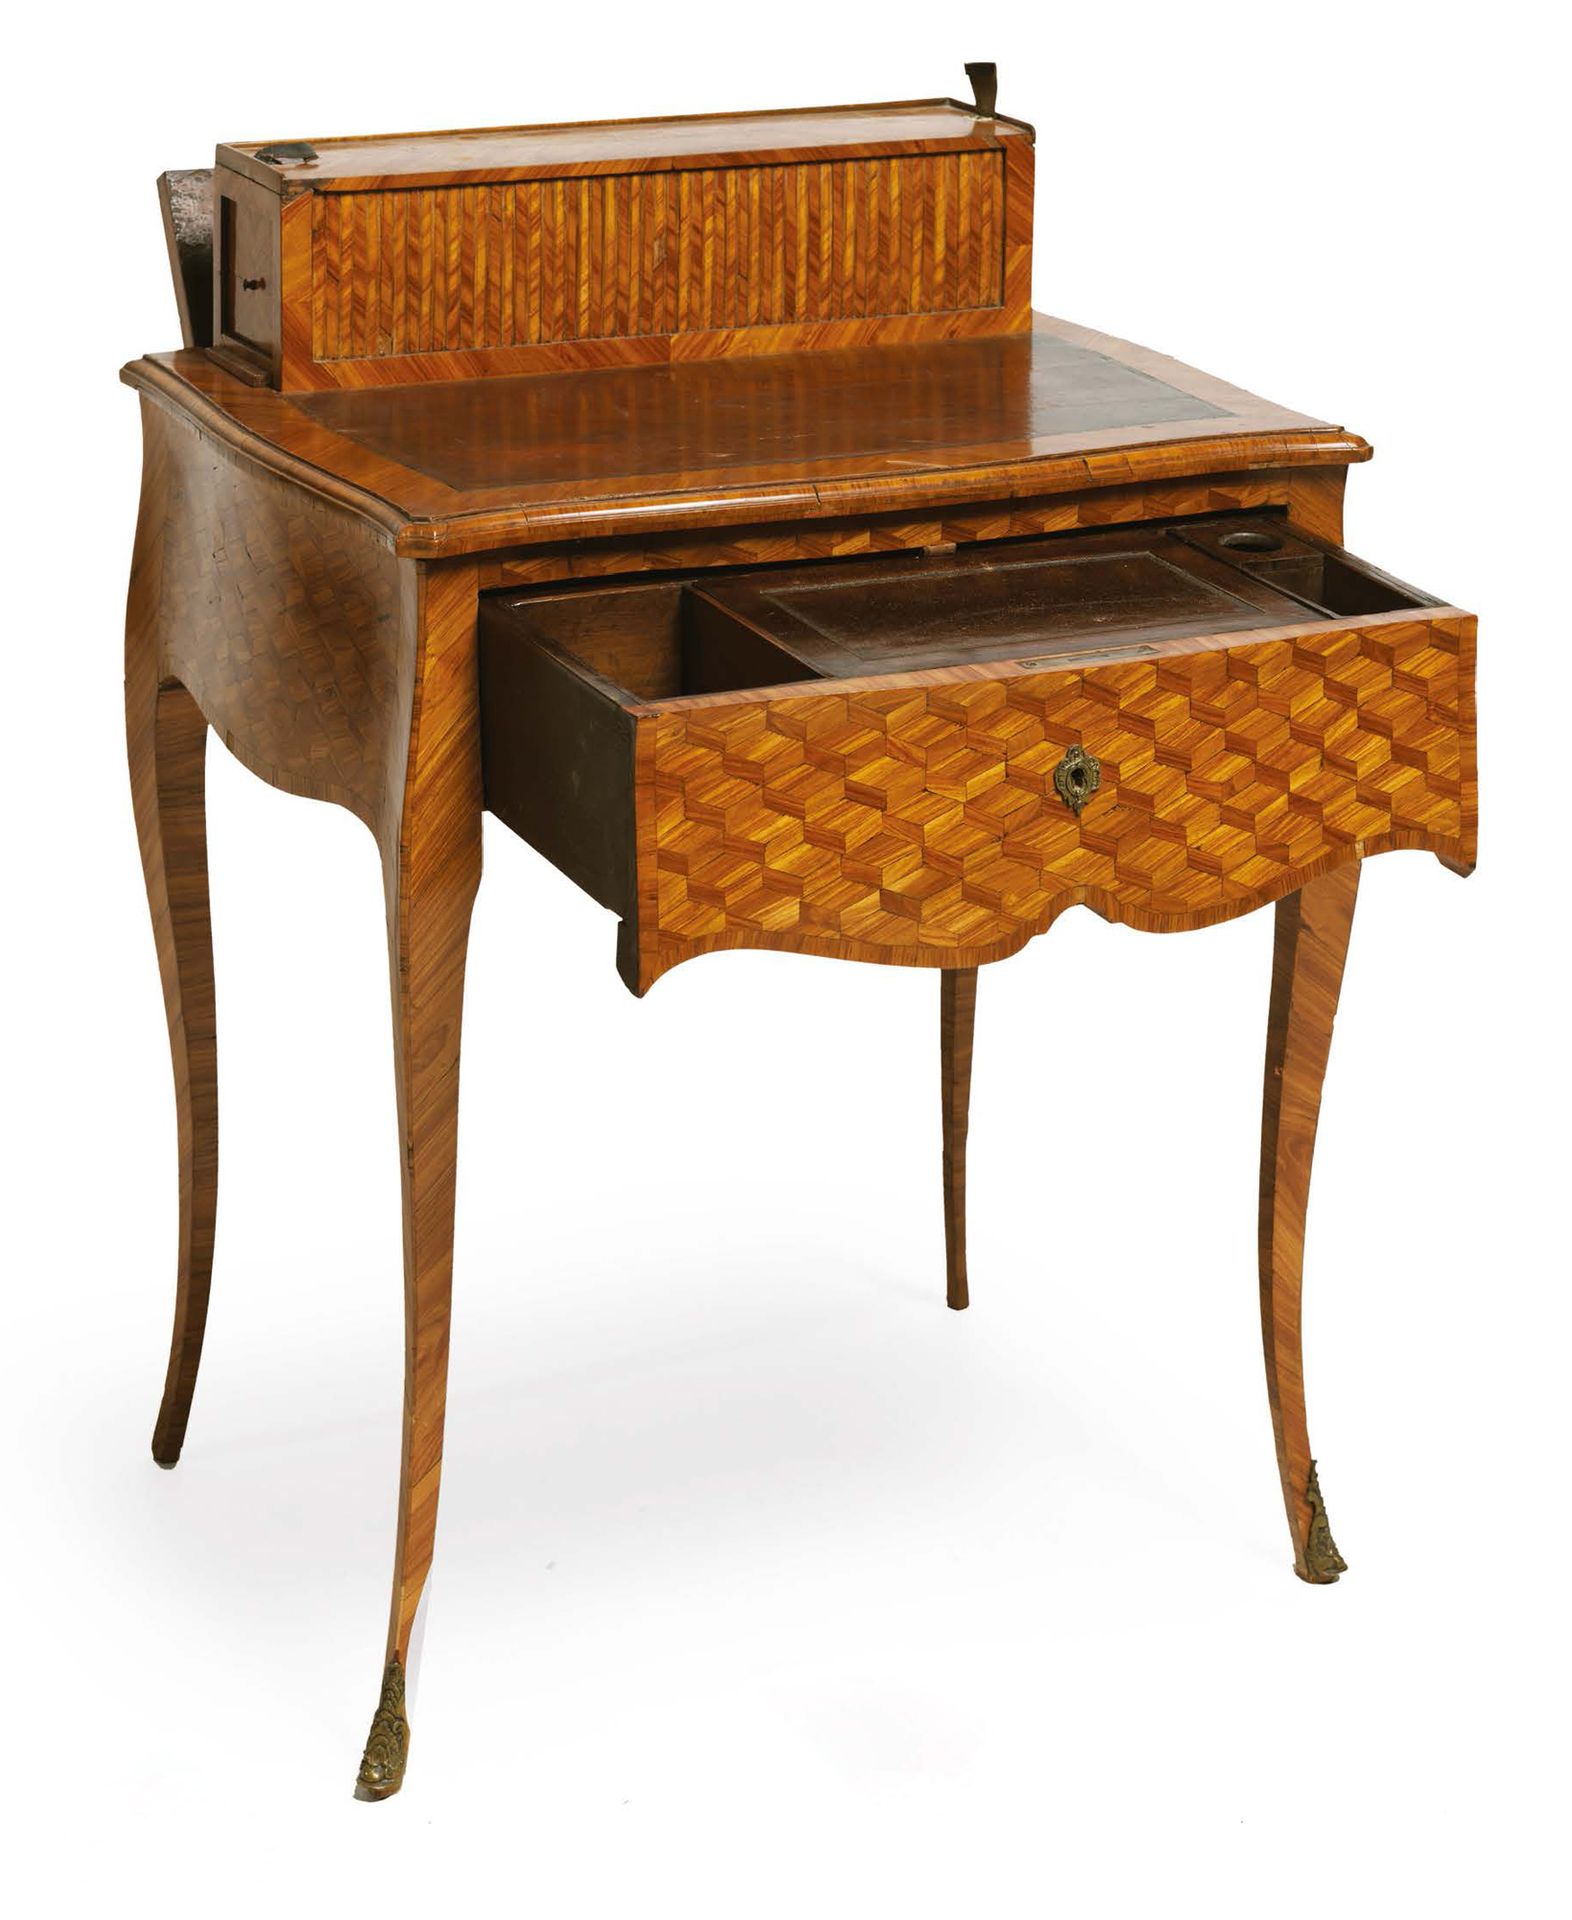 Null 被称为 "à la bourgogne "的紫罗兰木皮改造的桌子，带有几何楣和格子装饰，顶部露出一个台阶，前面打开一个抽屉形成一个书桌，搁置在凸起的腿&hellip;